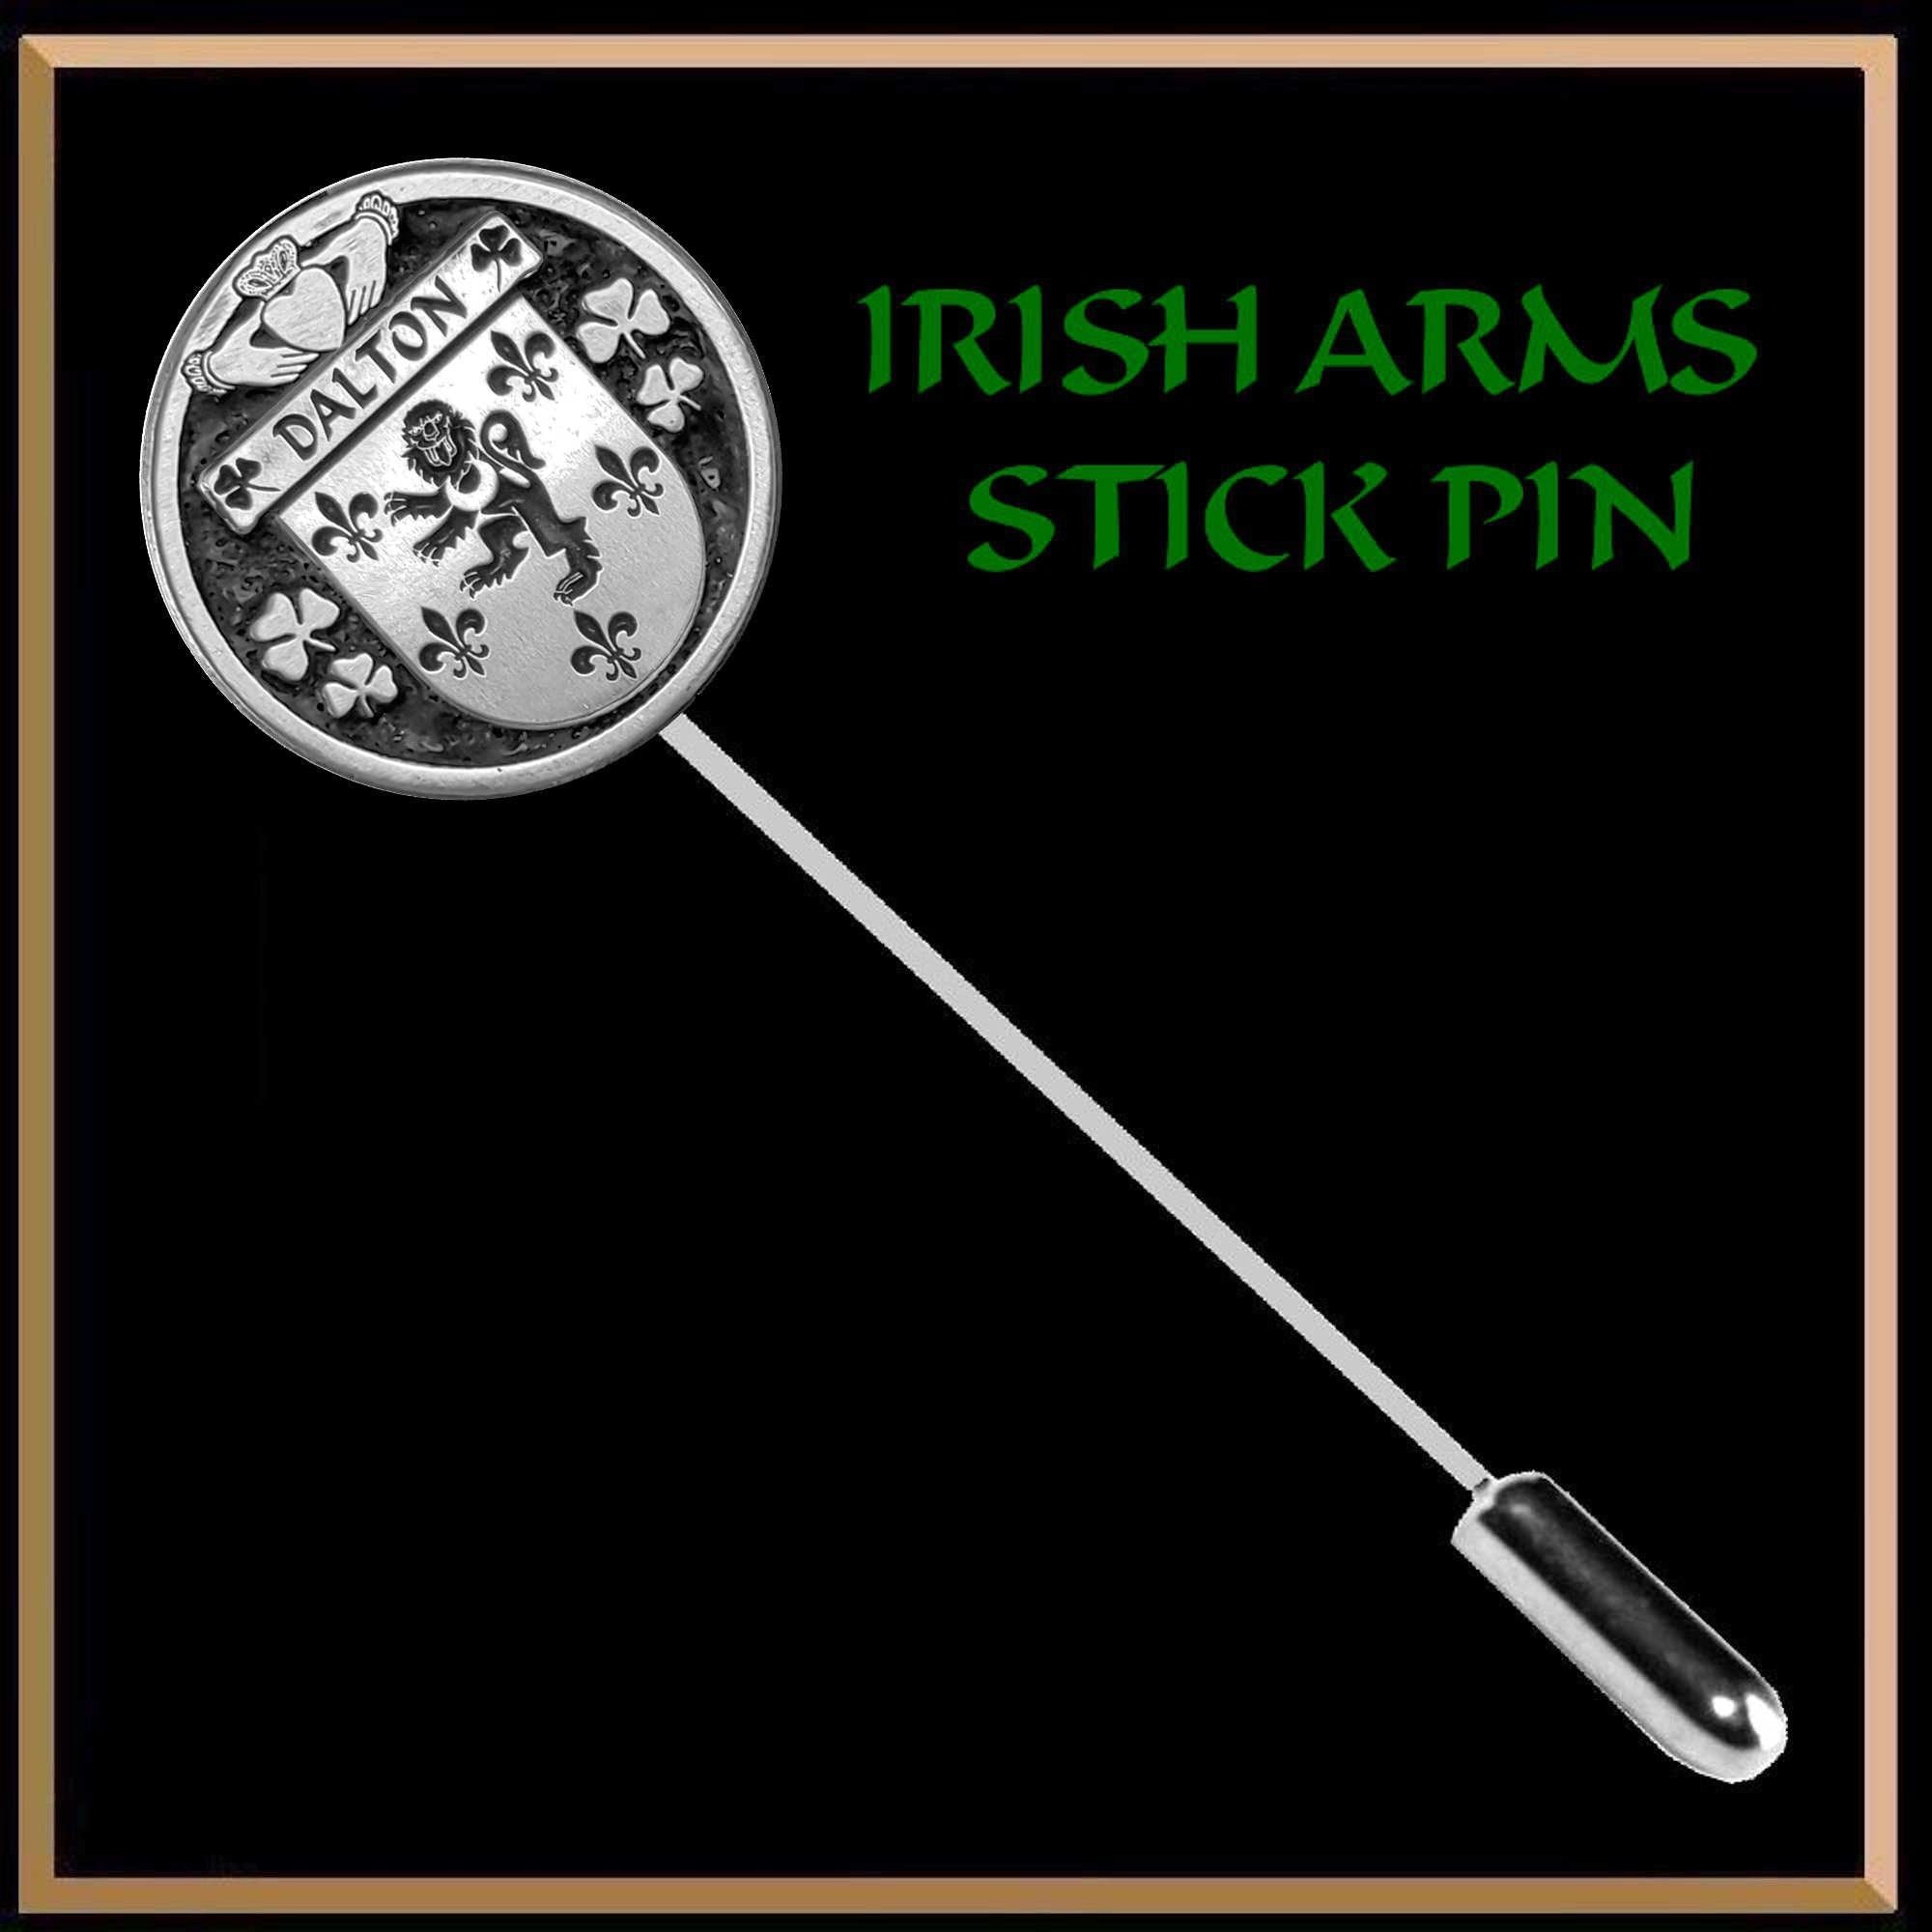 Dalton Irish Family Coat of Arms Stick Pin